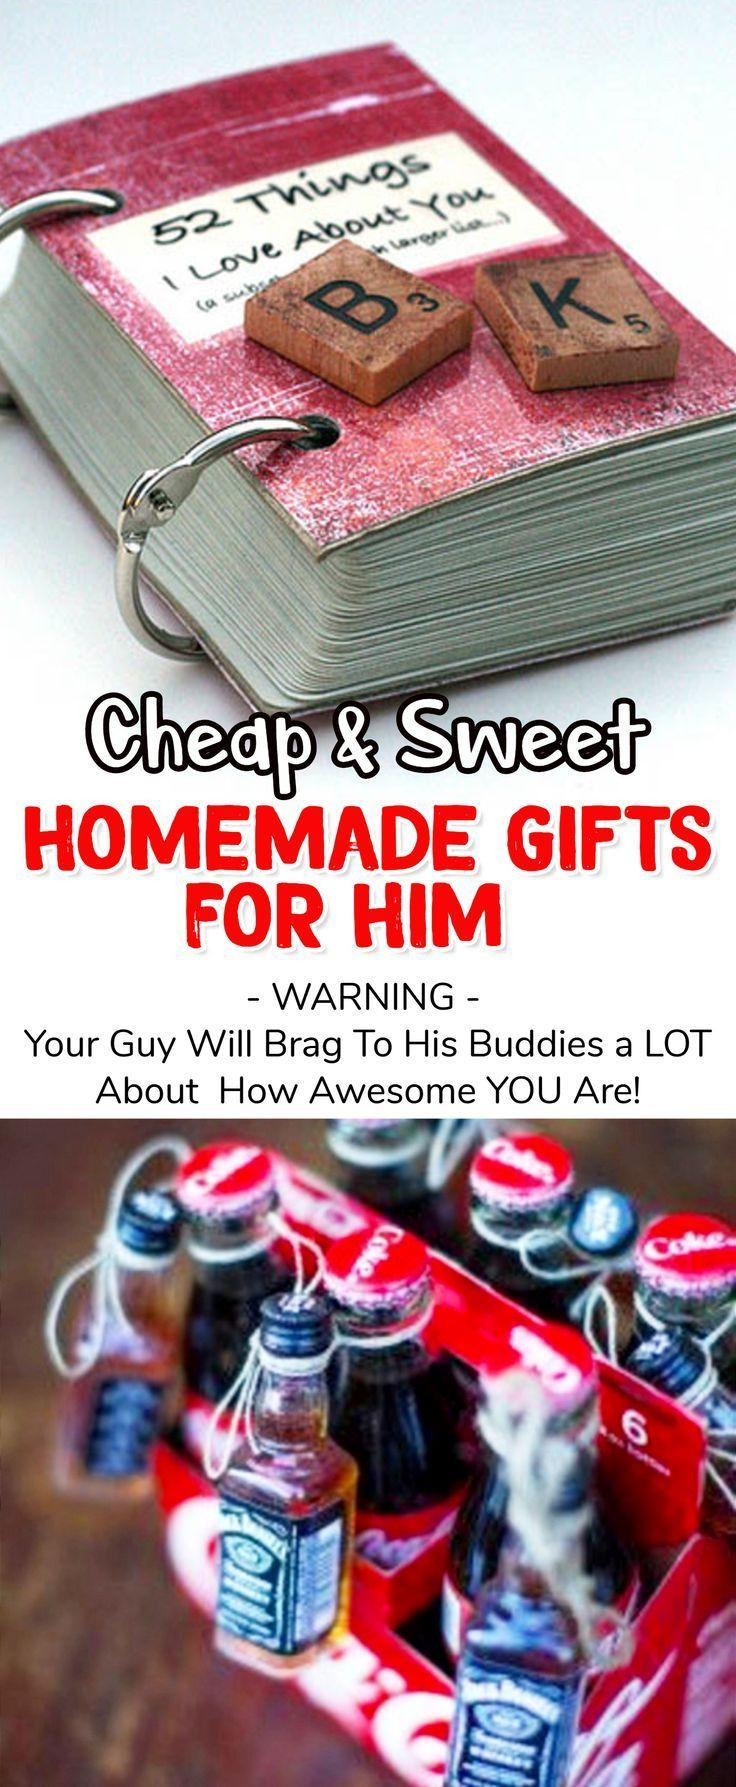 Handmade Gift Ideas For Boyfriend
 30 Birthday Ideas for Boyfriend Diy in 2020 With images